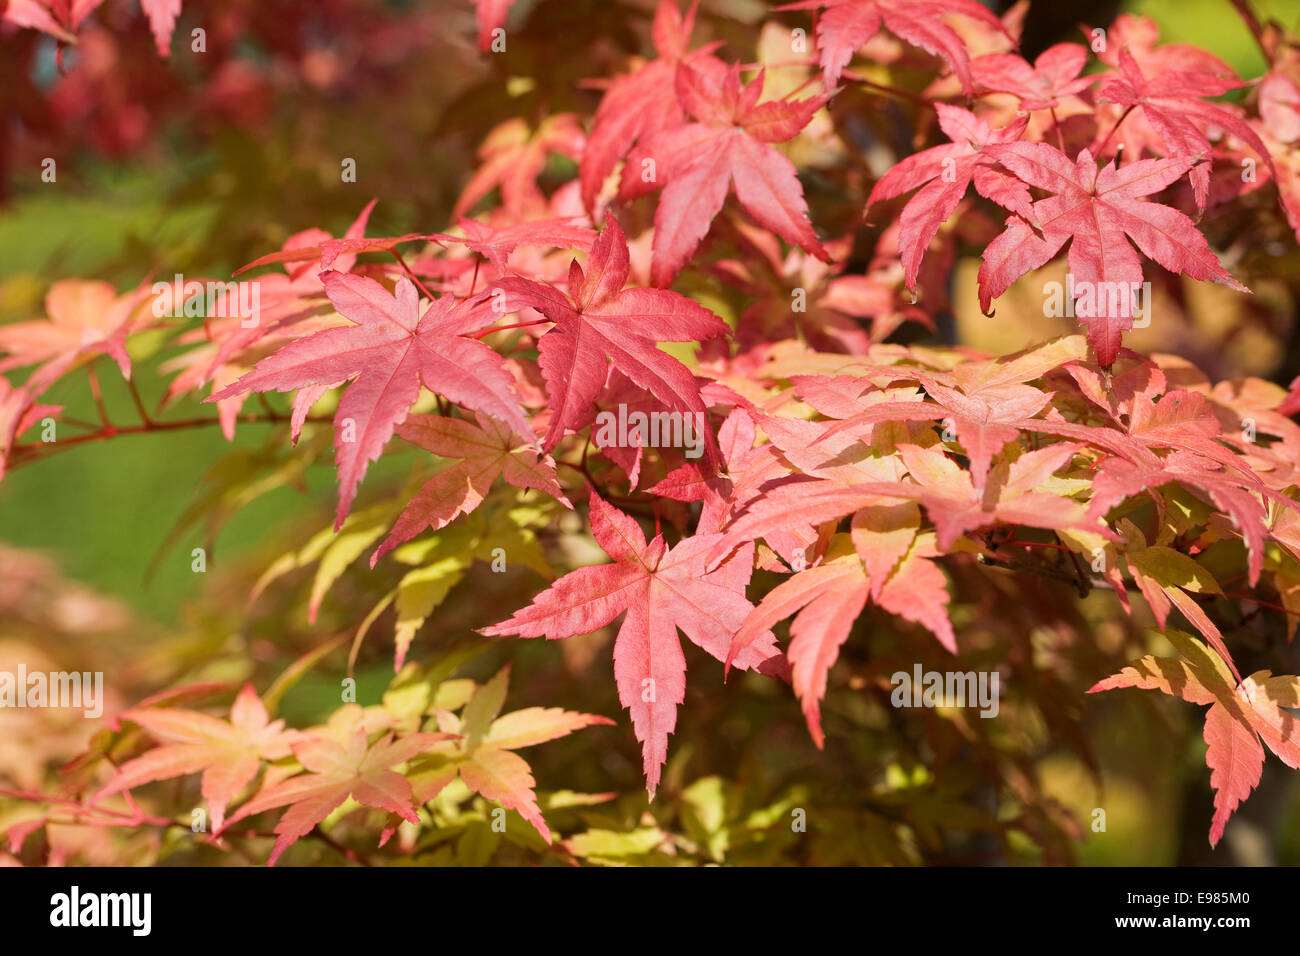 Acer palmatum 'Deshojo' leaves in Autumn. Stock Photo